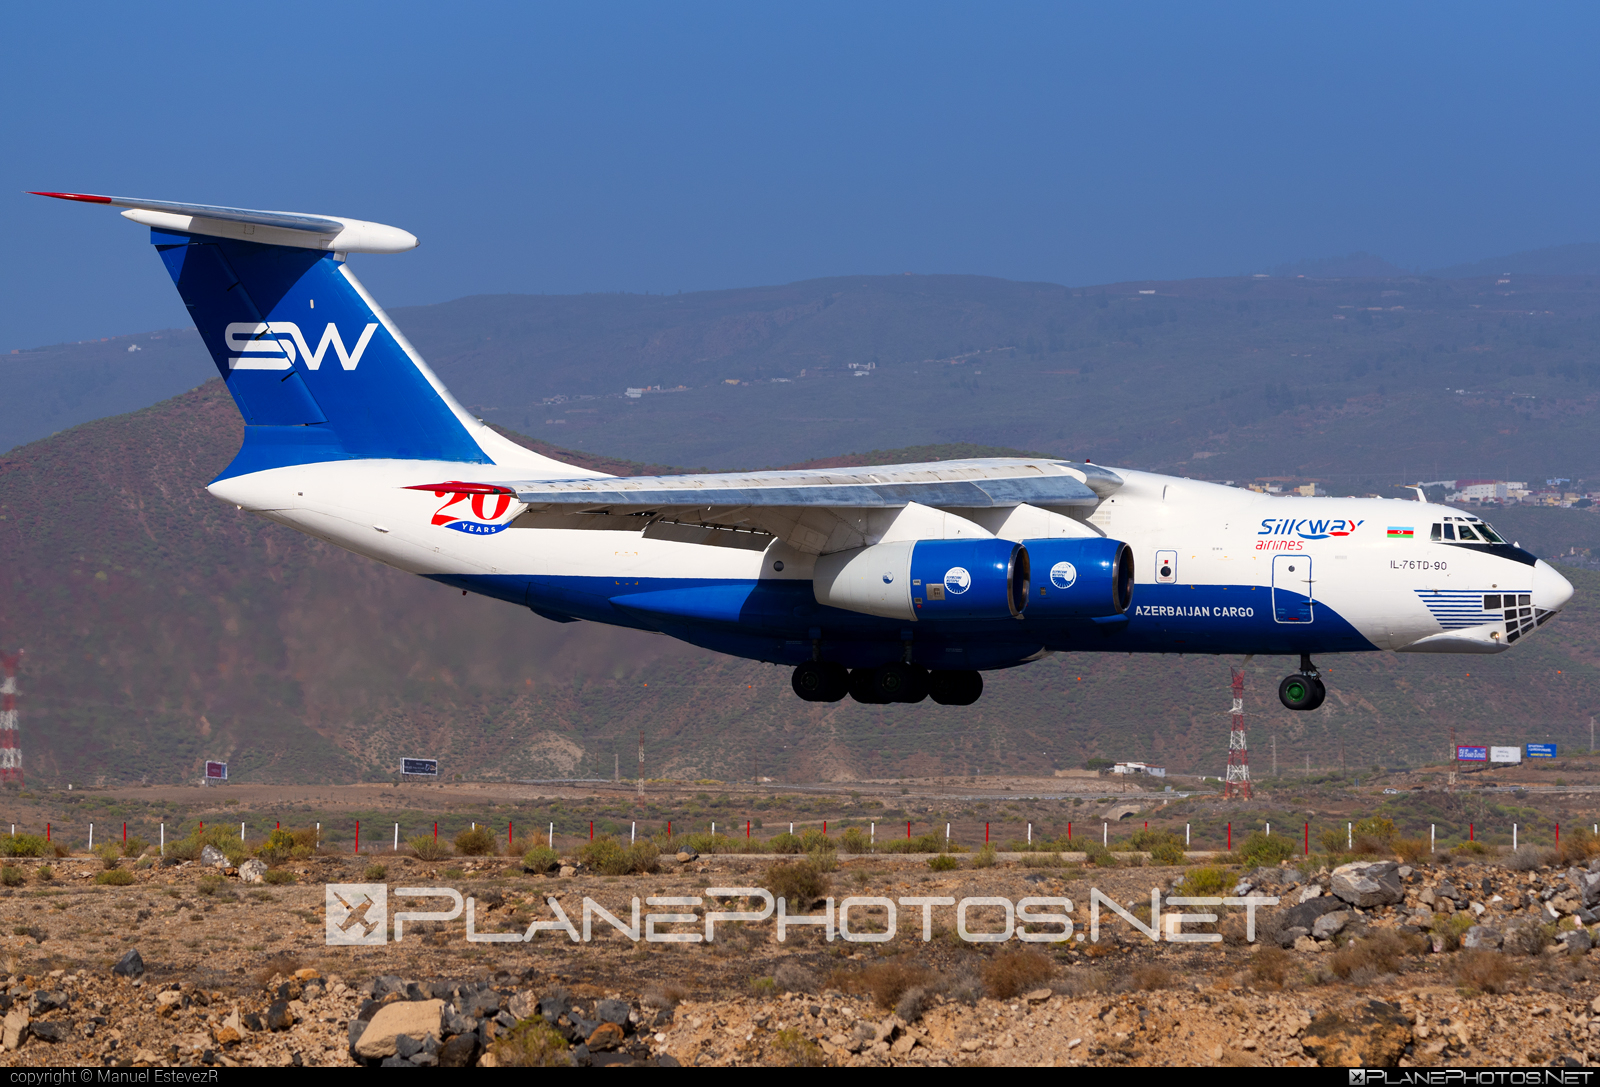 Ilyushin Il-76TD-90 - 4K-AZ100 operated by Silk Way Airlines #il76 #il76td90 #ilyushin #silkwayairlines